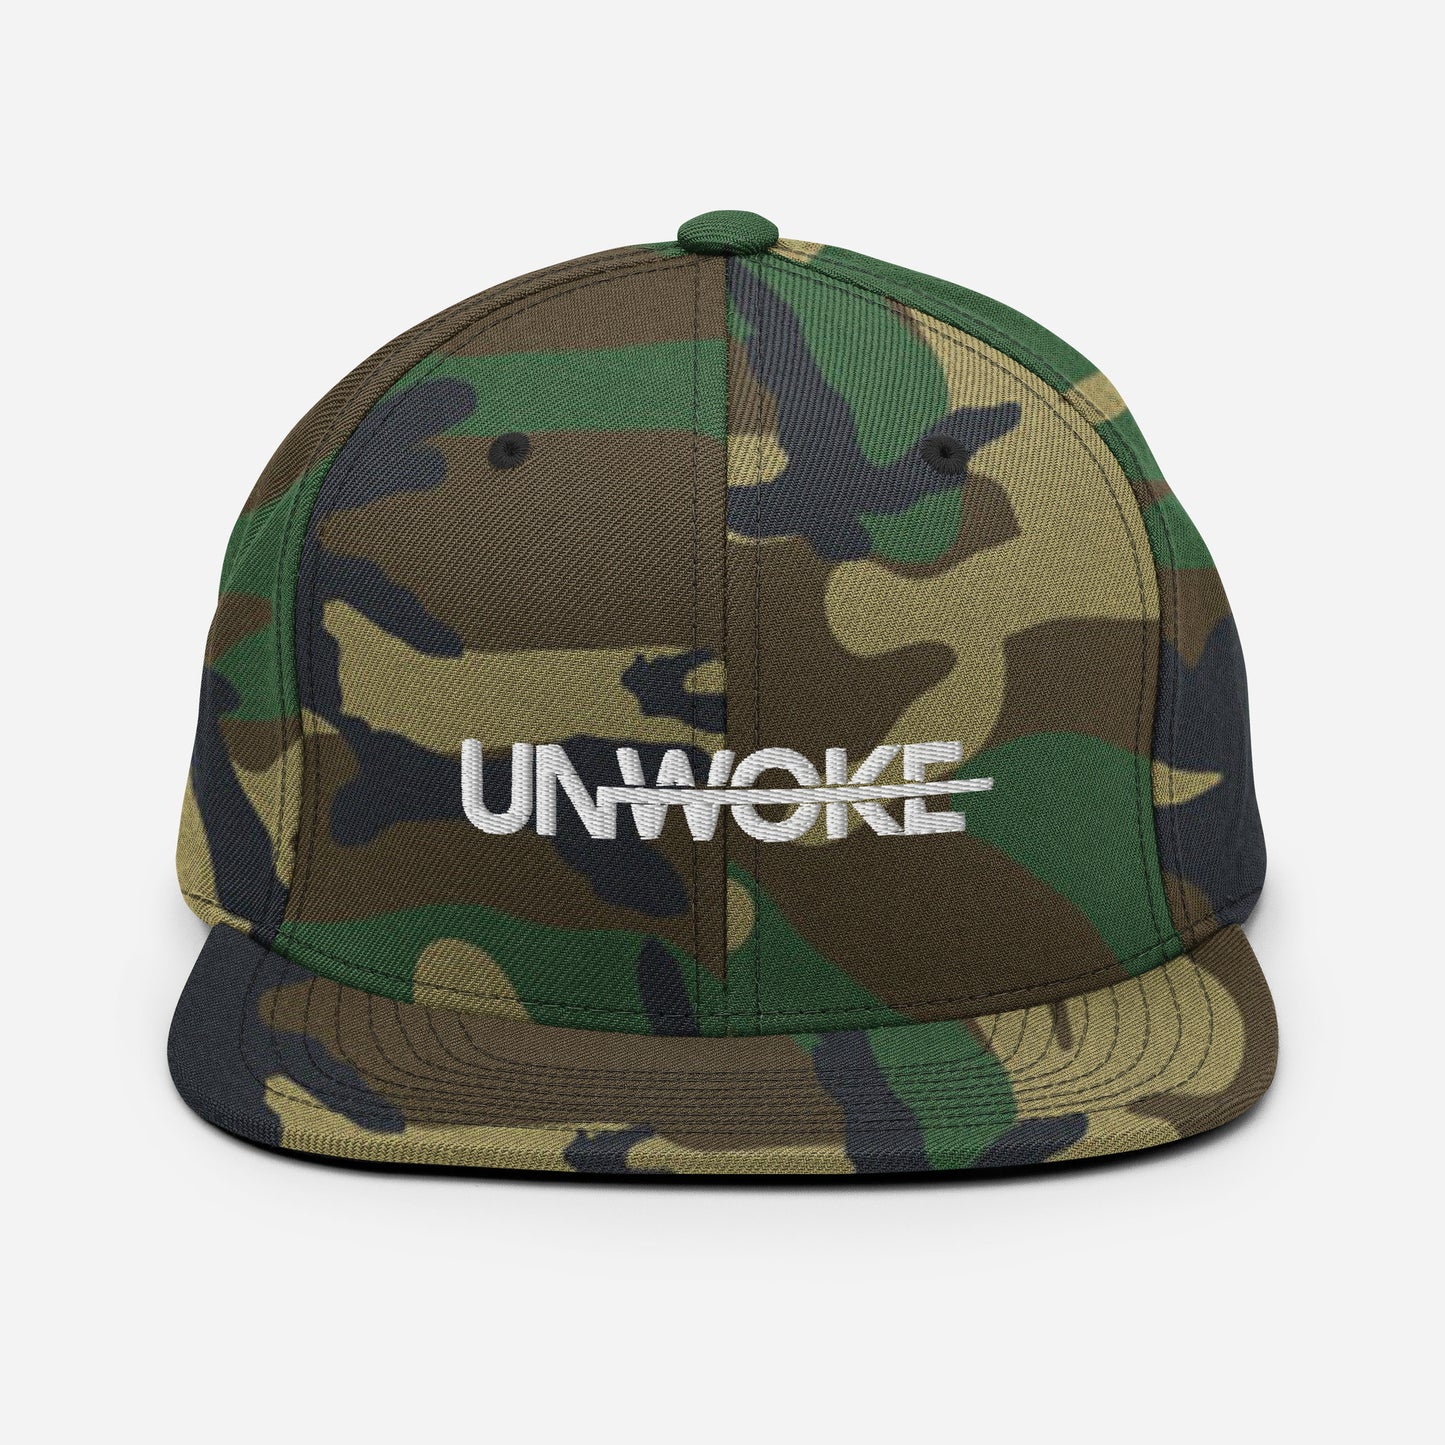 Unwoke Minimalist Cameo Snapback Hat